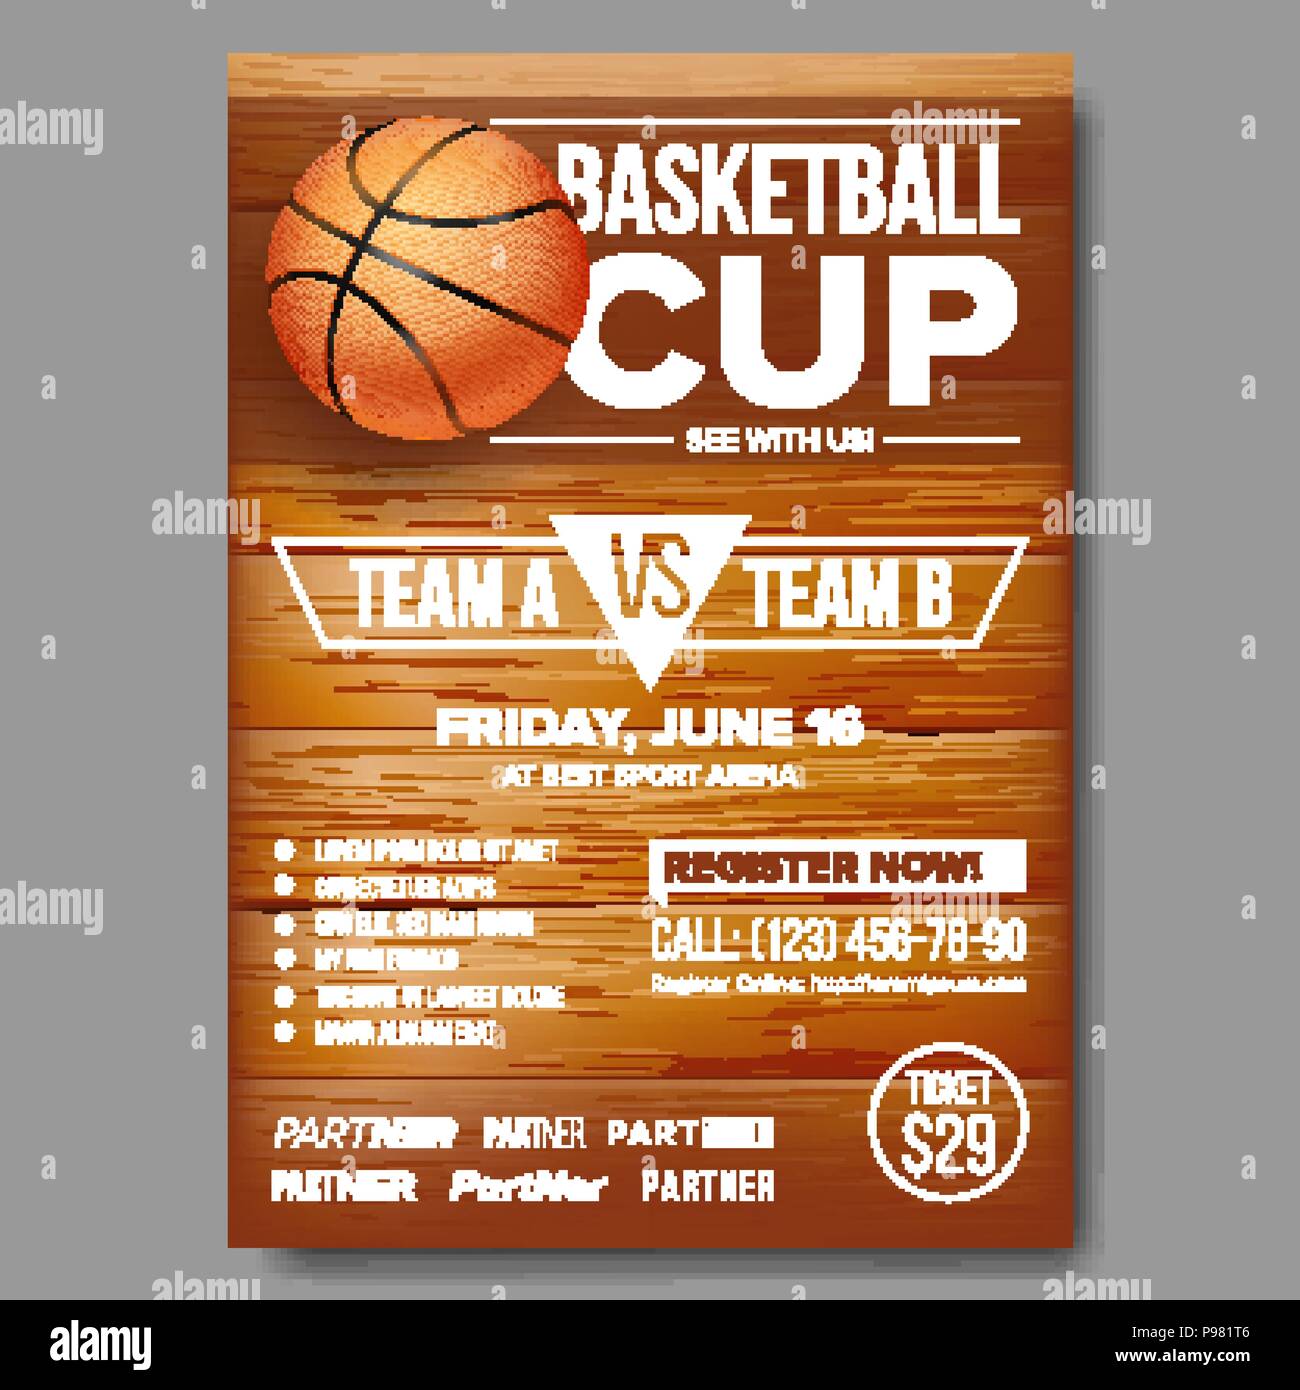 Basketball Poster Vector. Basketball Ball. Sport Design For Sports Bar Event  Promotion. Basketball Game Flyer, Leaflet. Club Invitation Template  Illustration Stock Vector Image & Art - Alamy